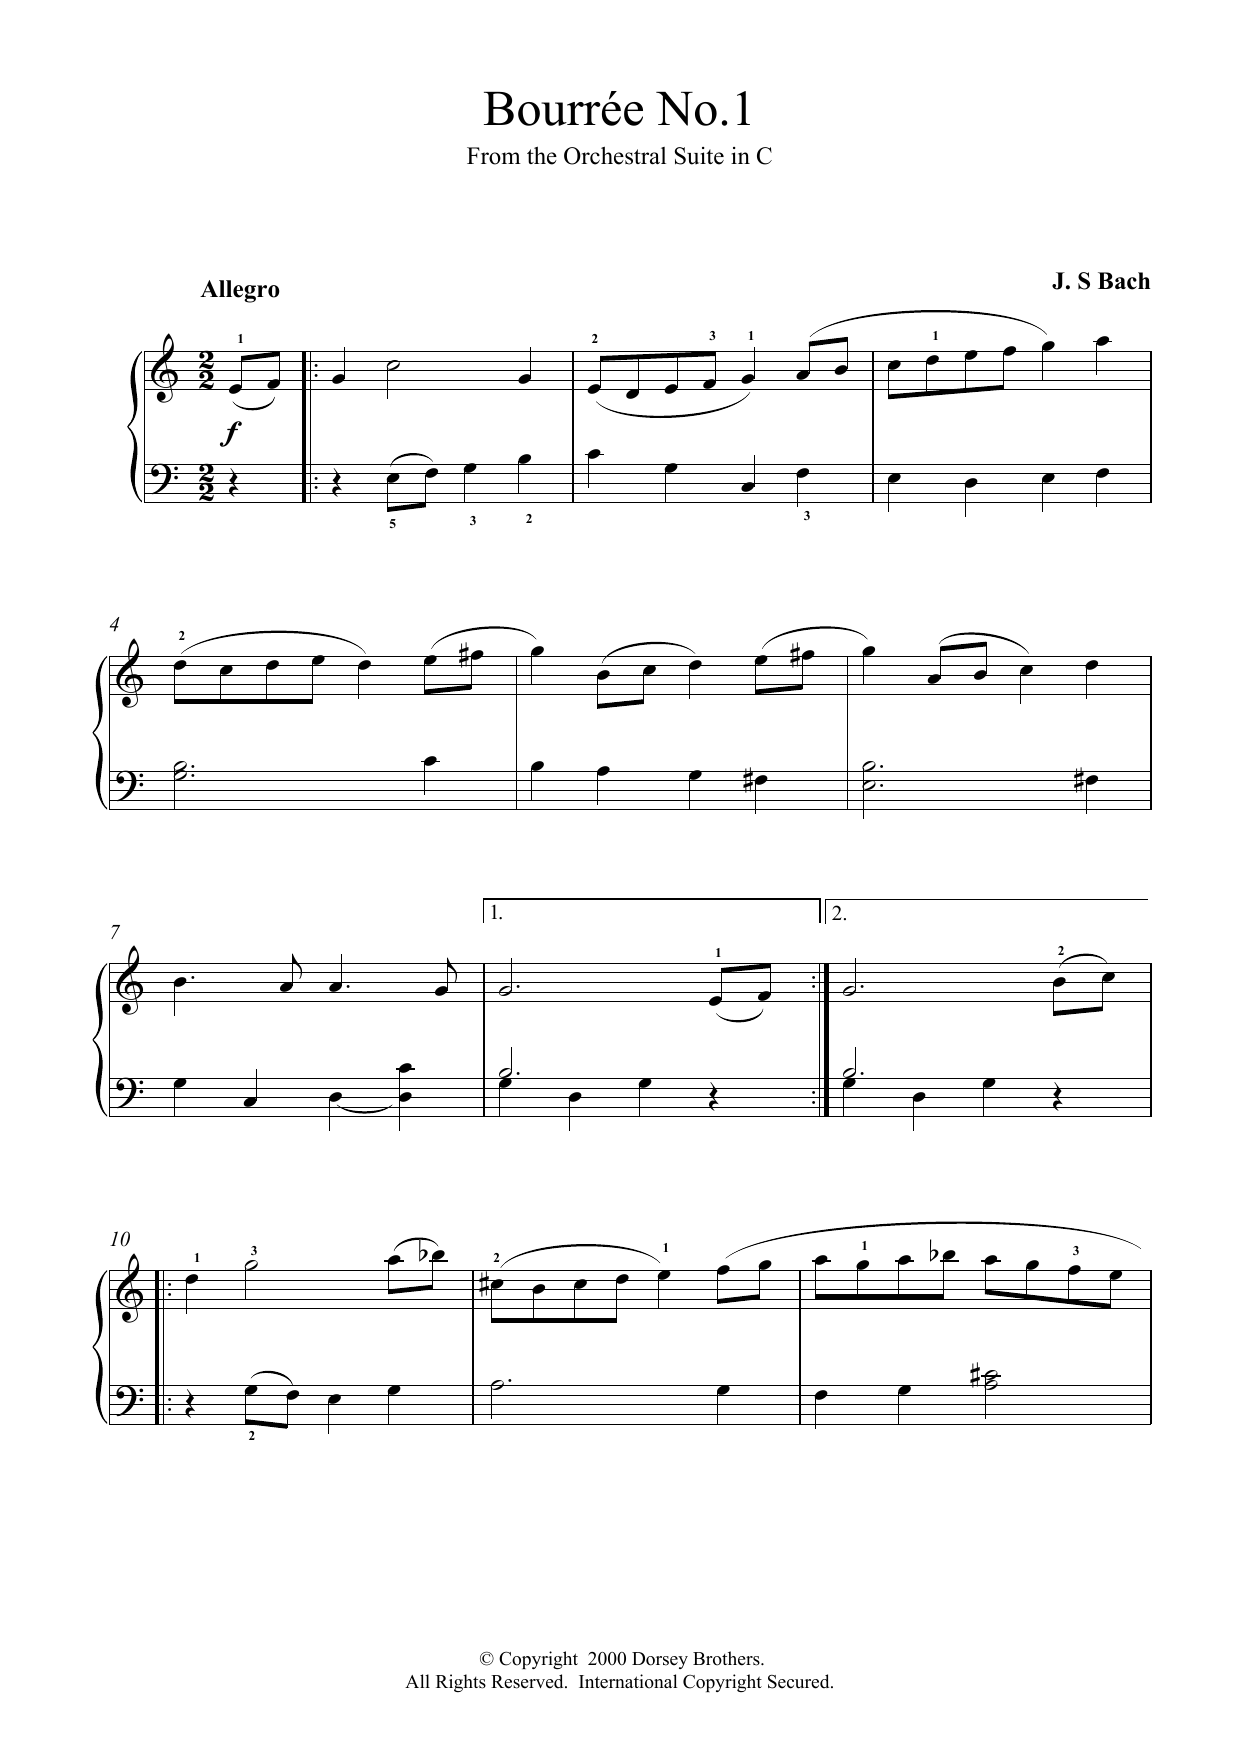 Johann Sebastian Bach Bourree No.1 Sheet Music Notes & Chords for Piano - Download or Print PDF